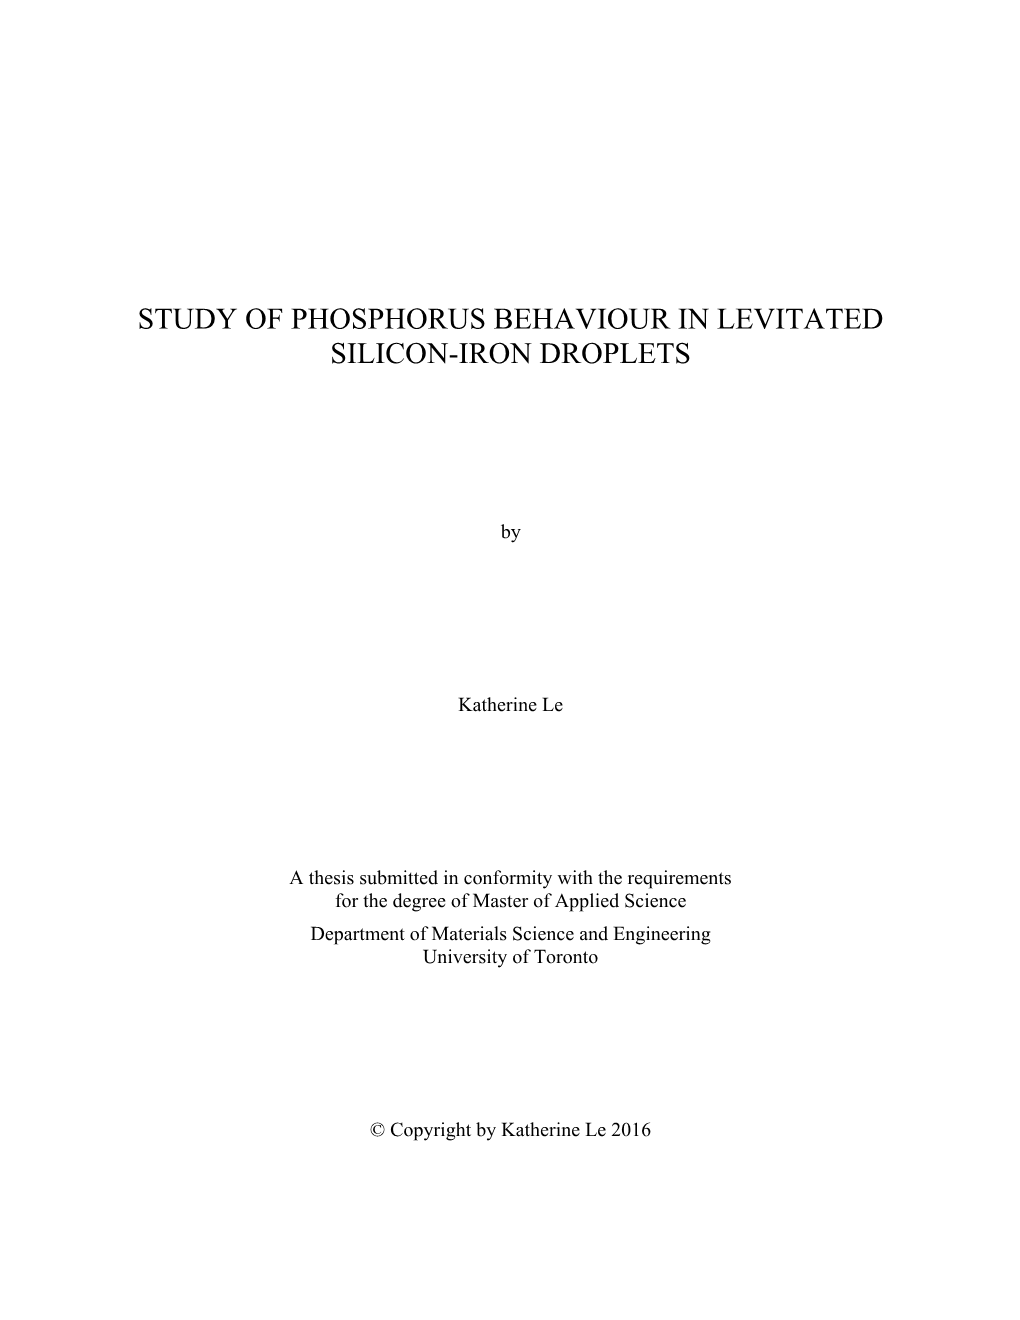 Study of Phosphorus Behaviour in Levitated Silicon-Iron Droplets